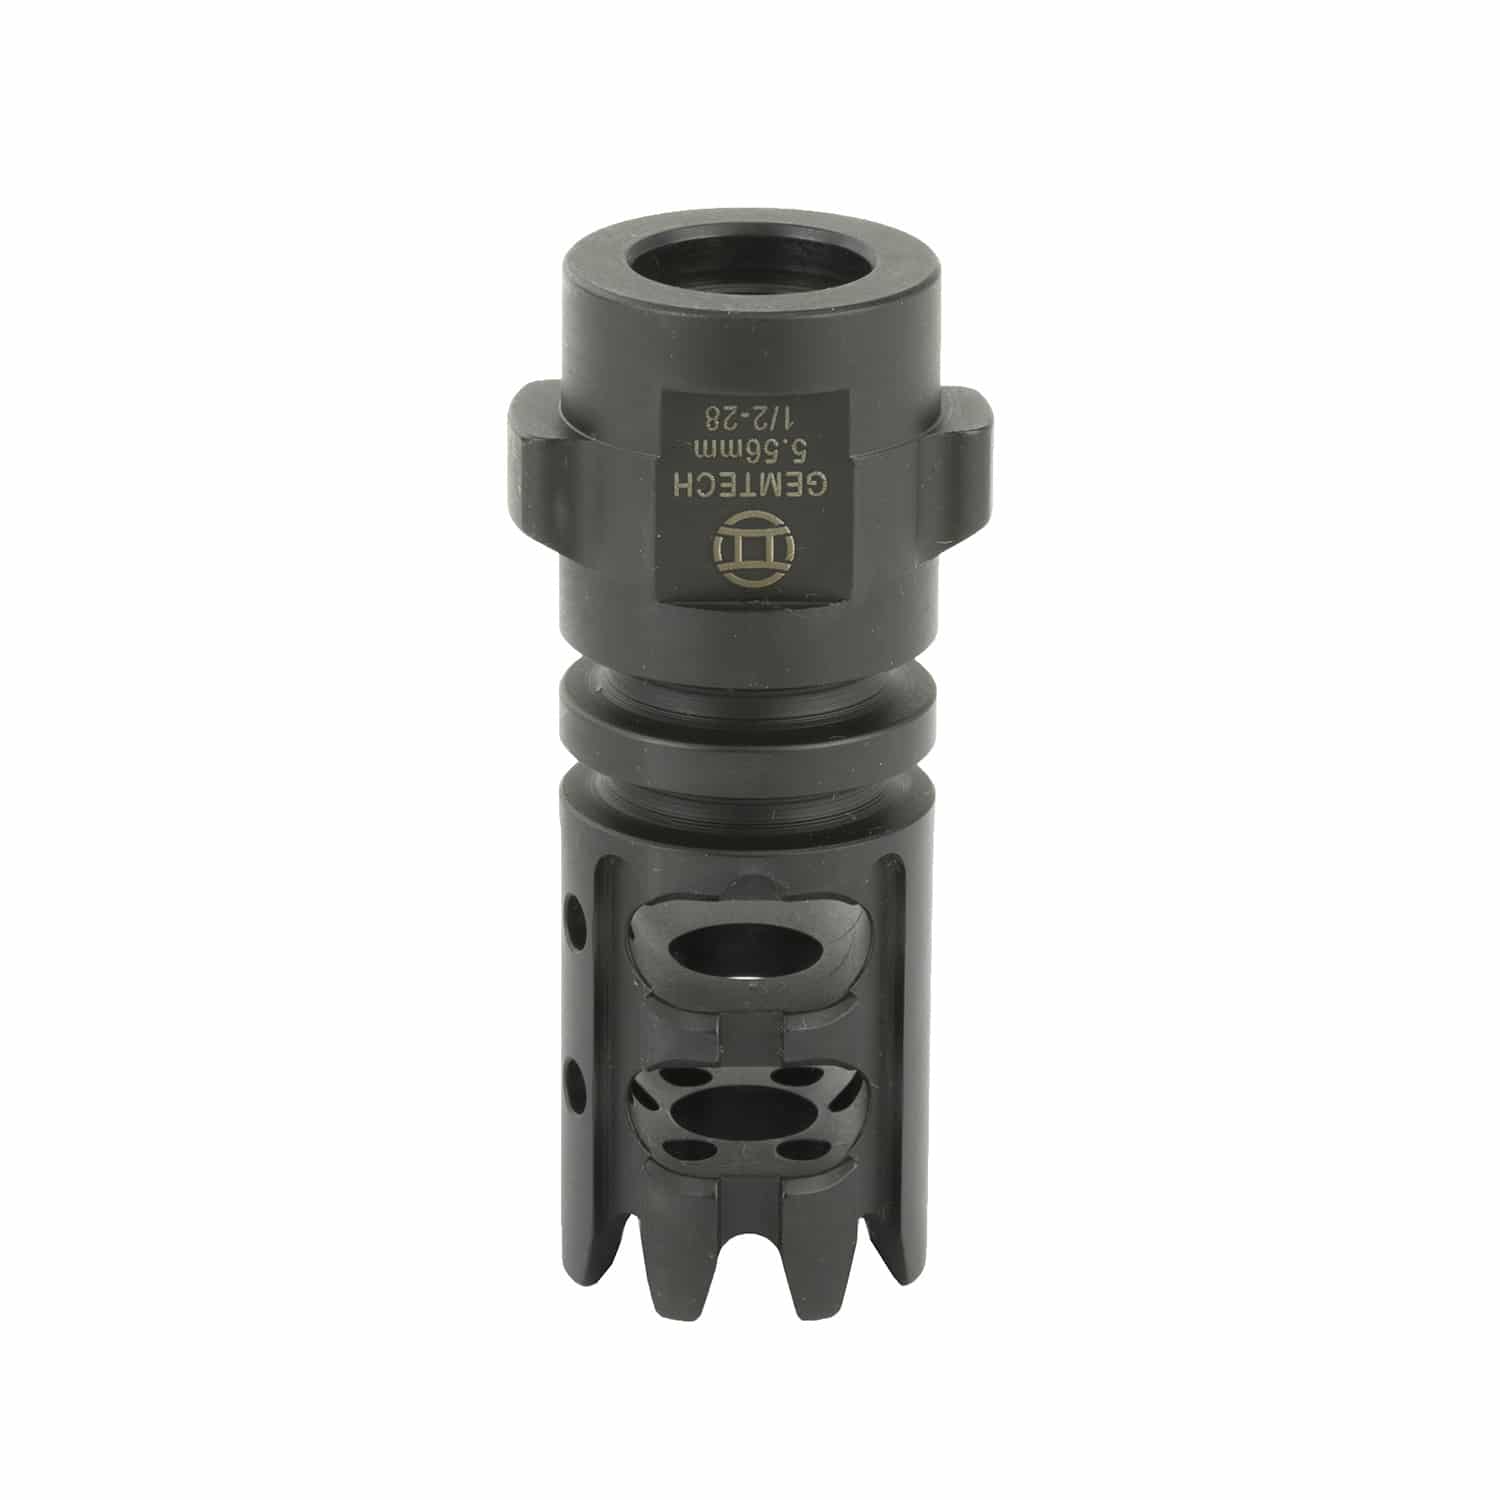 Cadex MX1 Micro Muzzle Brake for AR15, 1/2-28 for .223/5.56